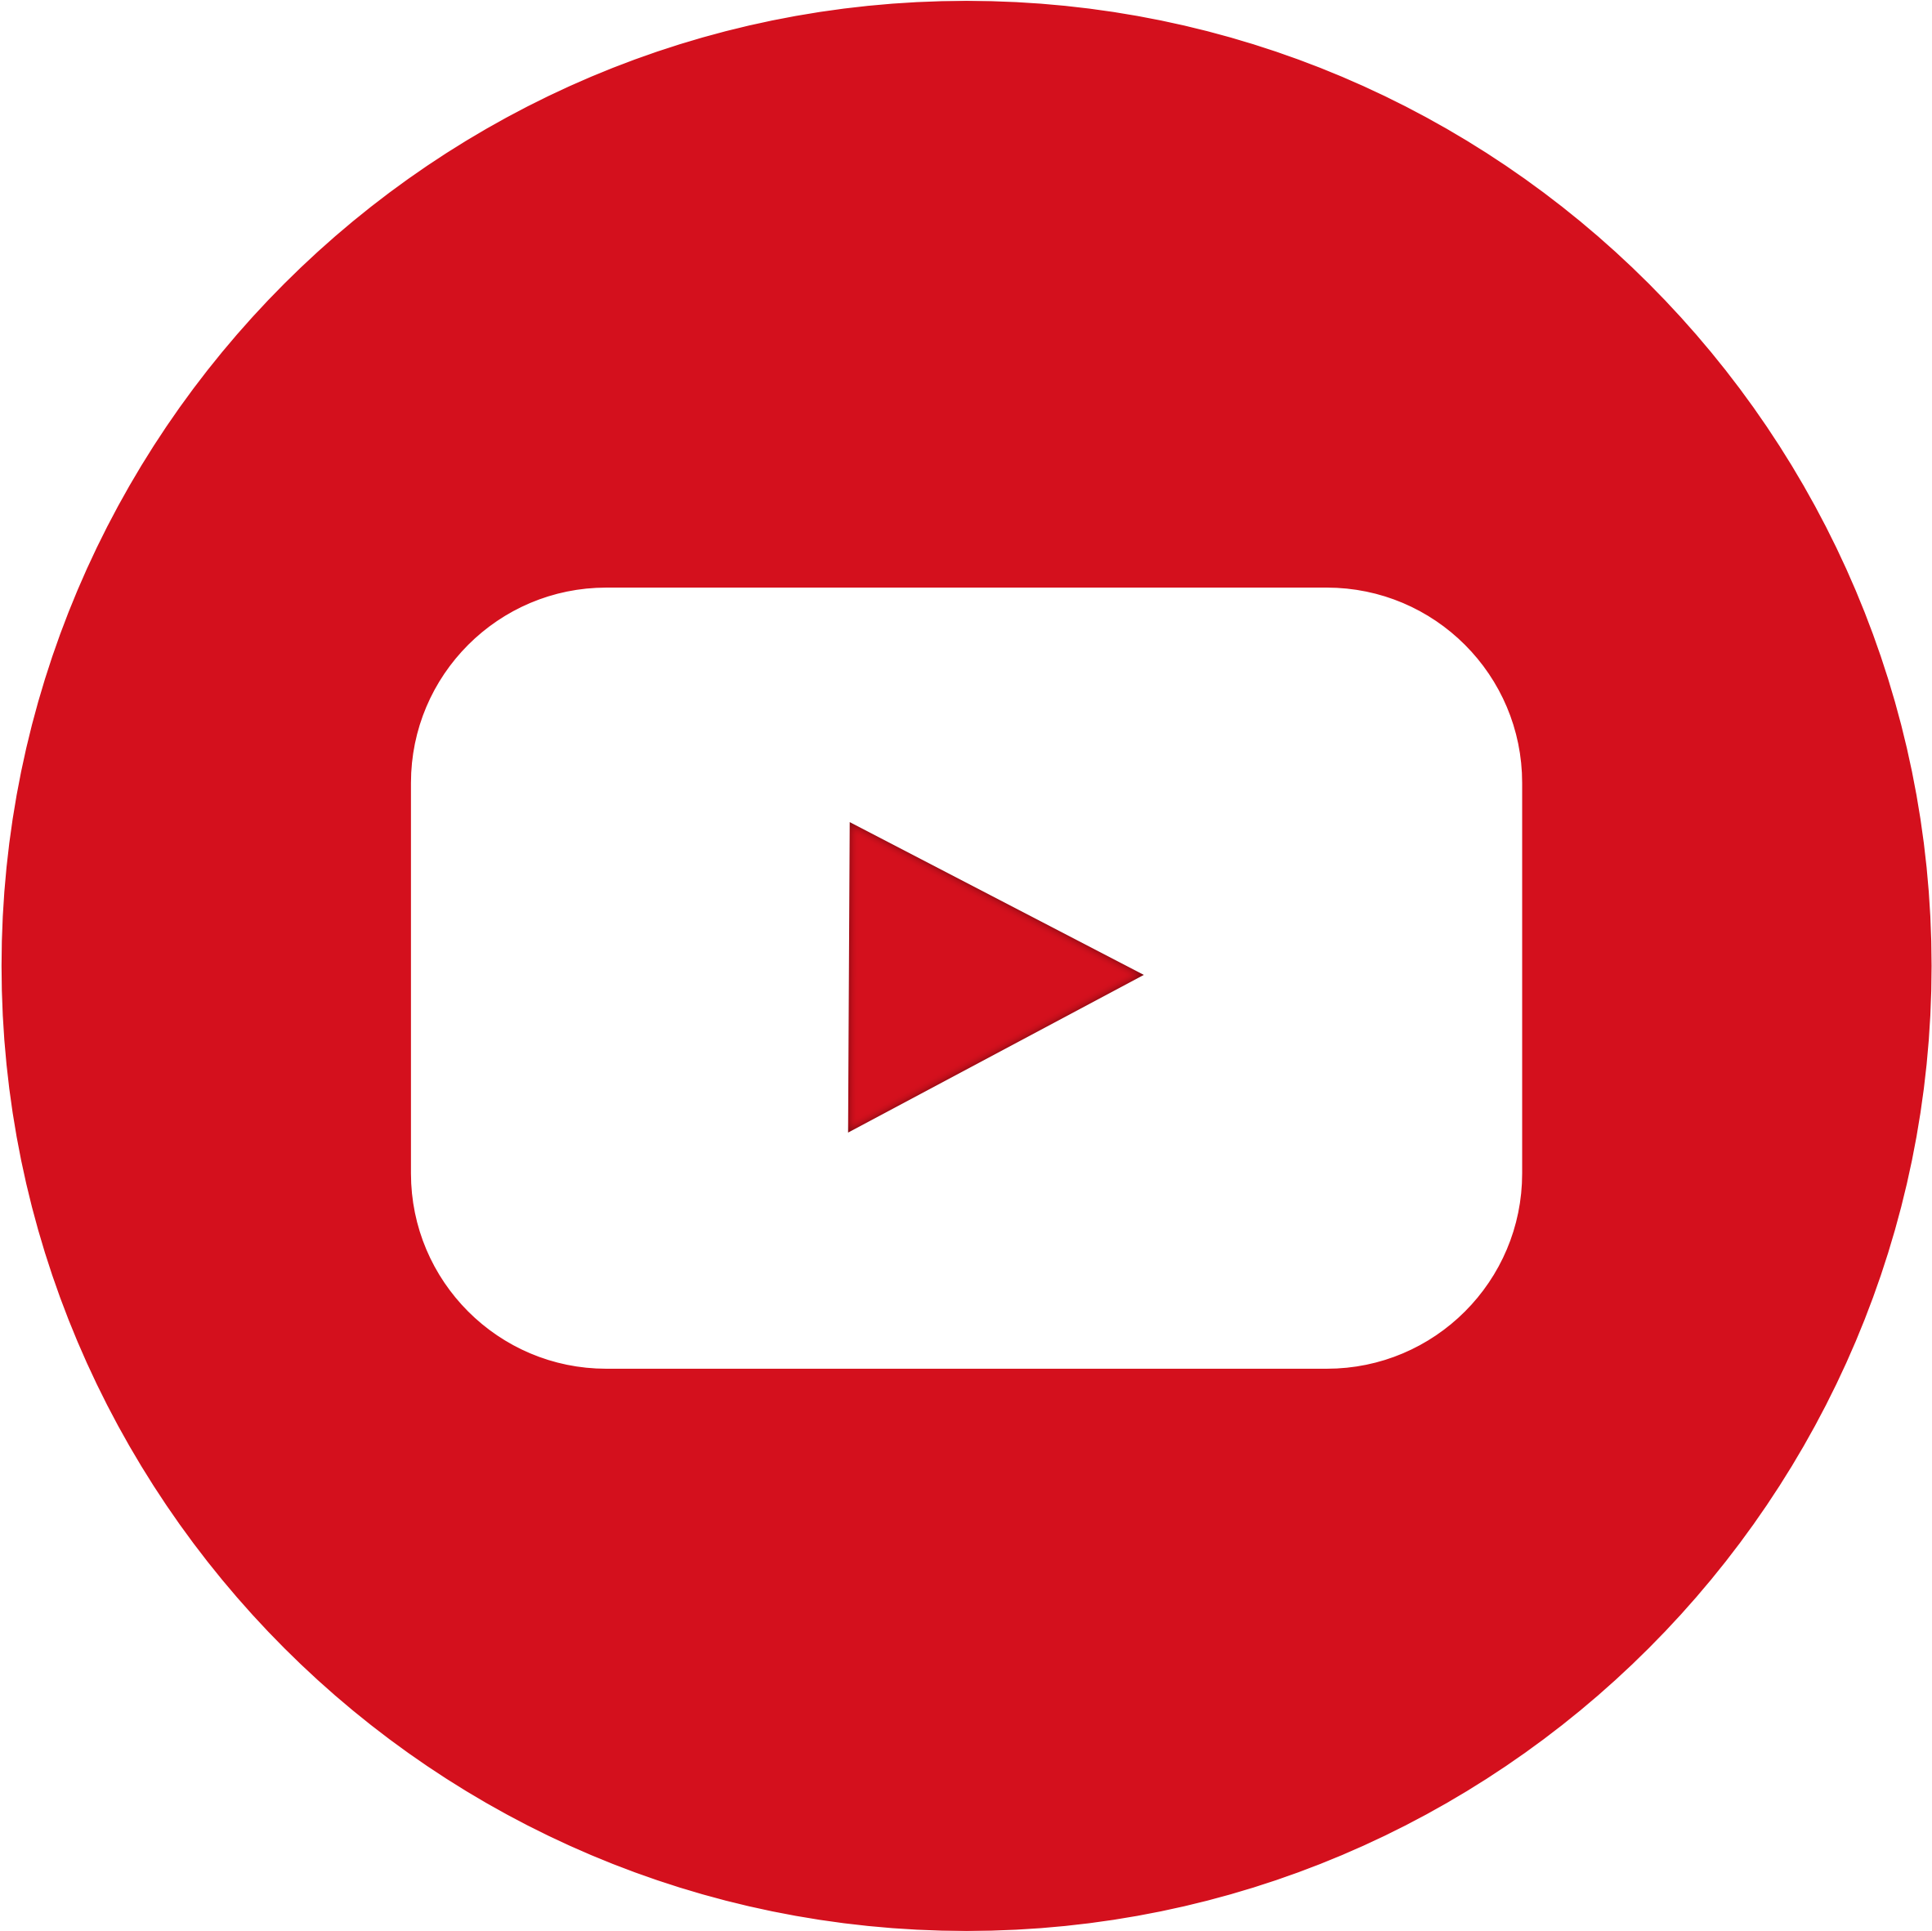 Youtube Video Views